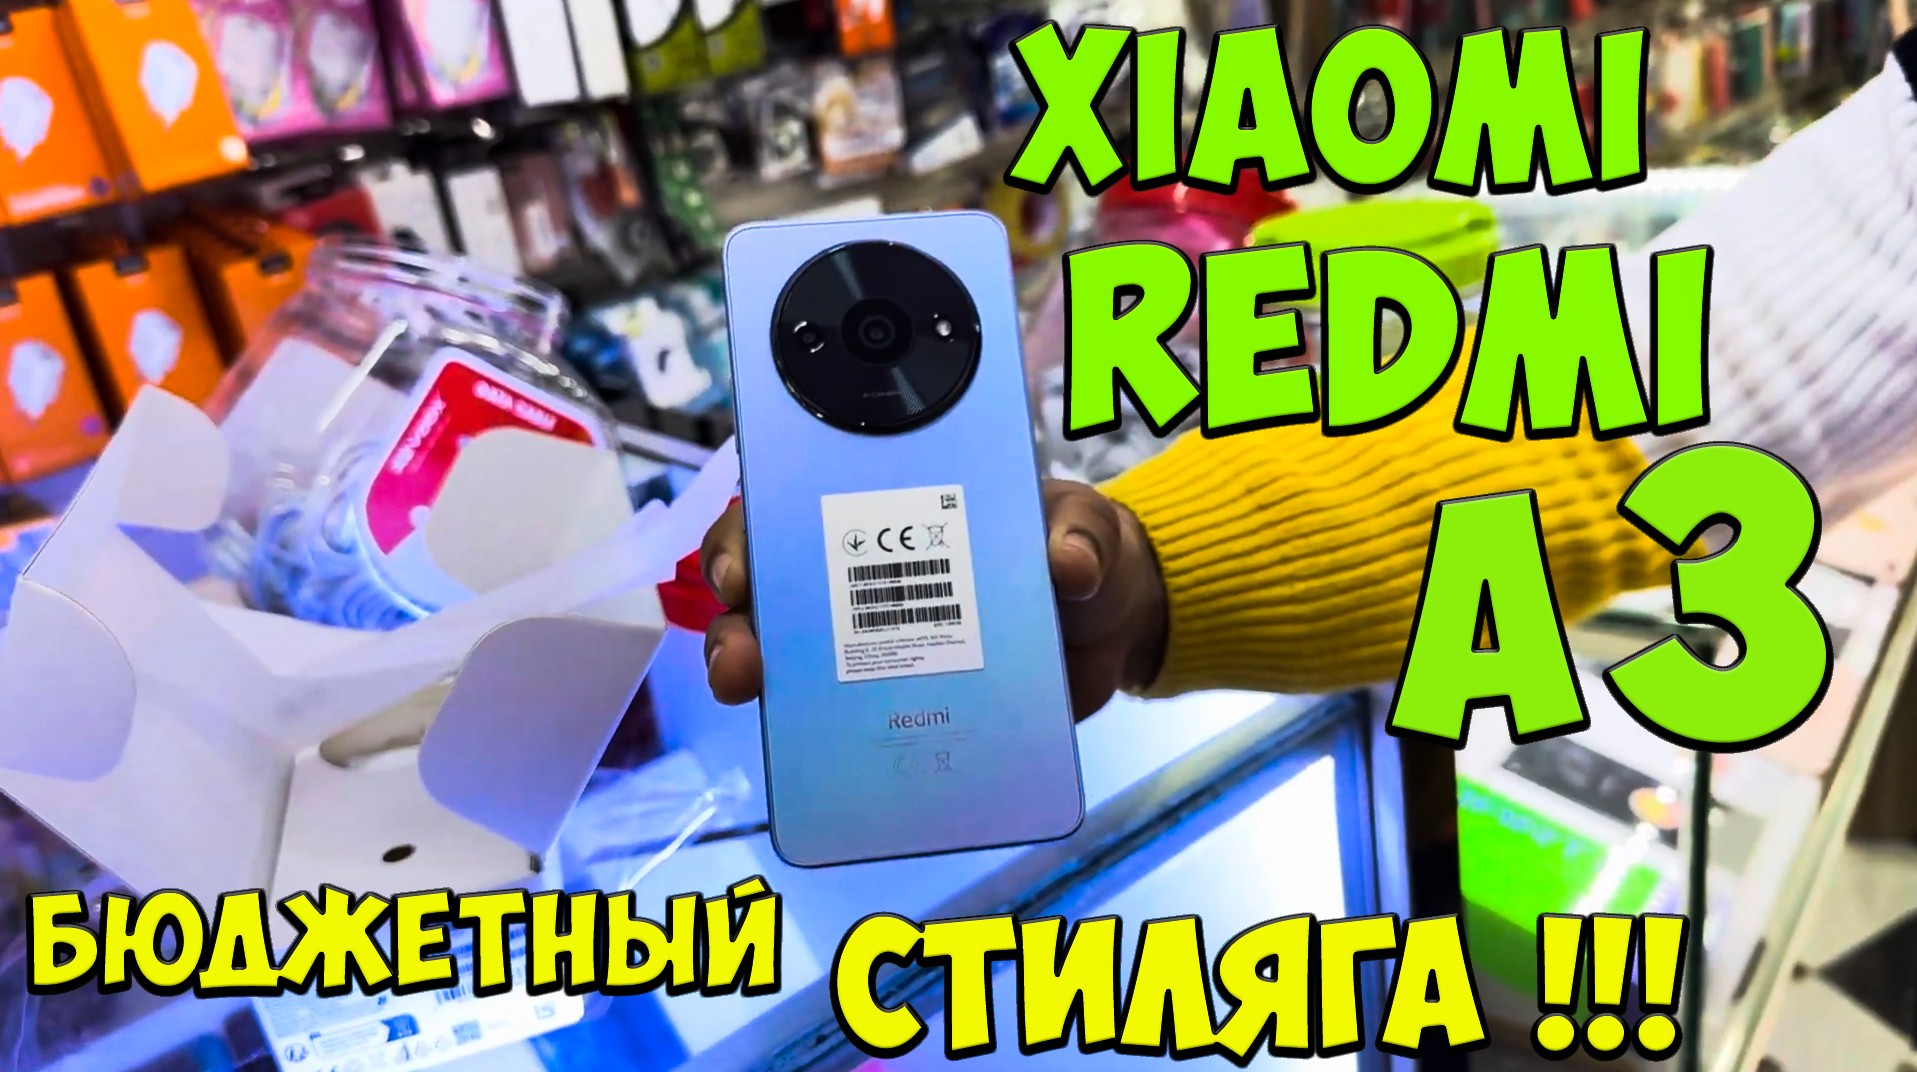 Xiaomi Redmi A3 - Первое знакомство с бюджетным Стилягой ?? #redmia3 #xiaomiredmia3 #Редмиа3